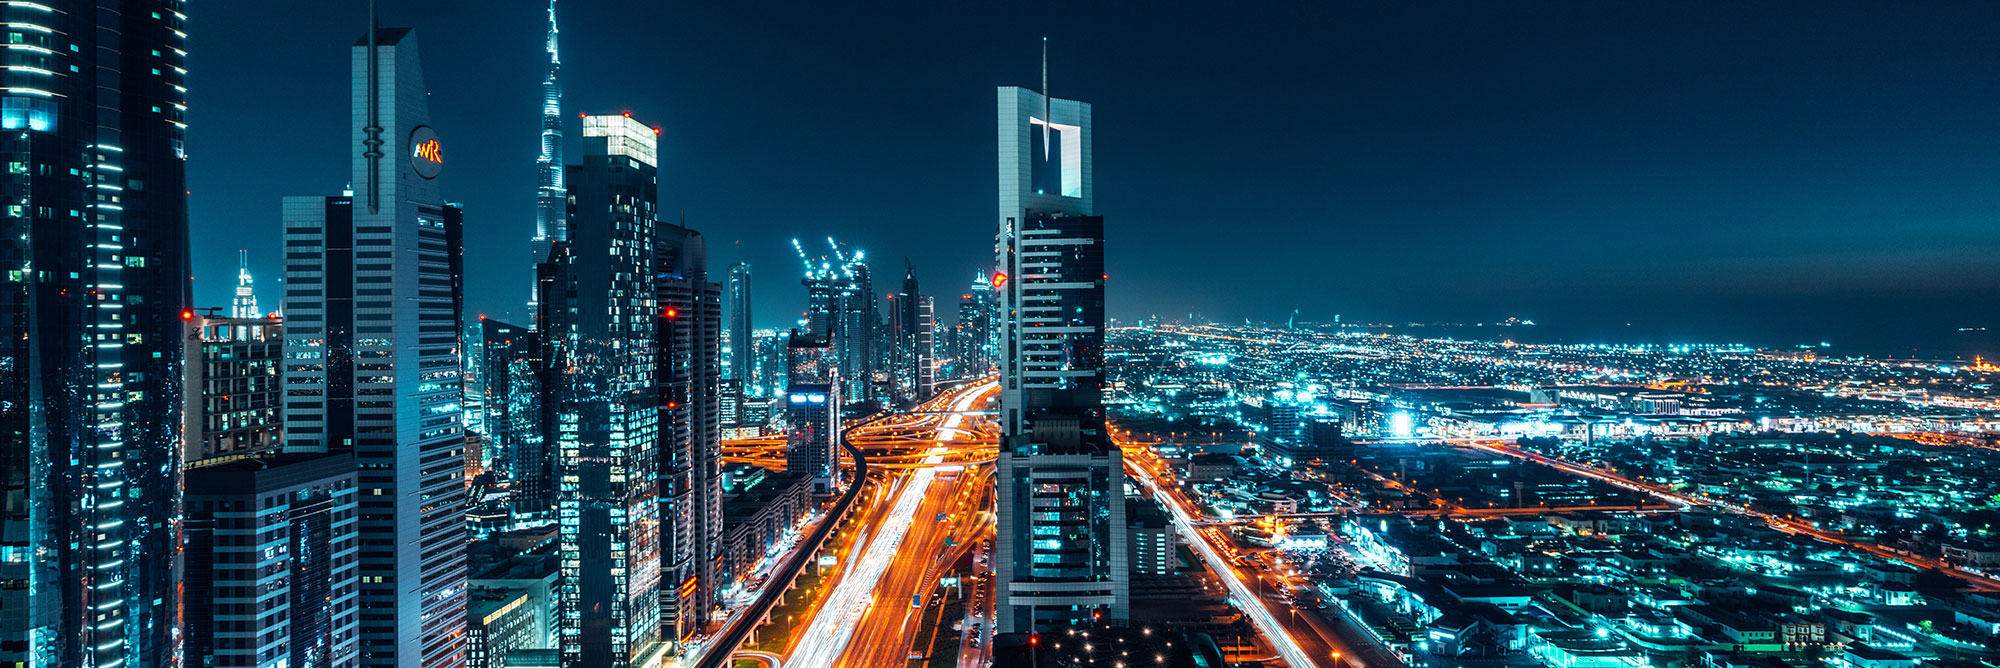 Bellavista Tower - Limitless Valley - Real Estate - Dubai